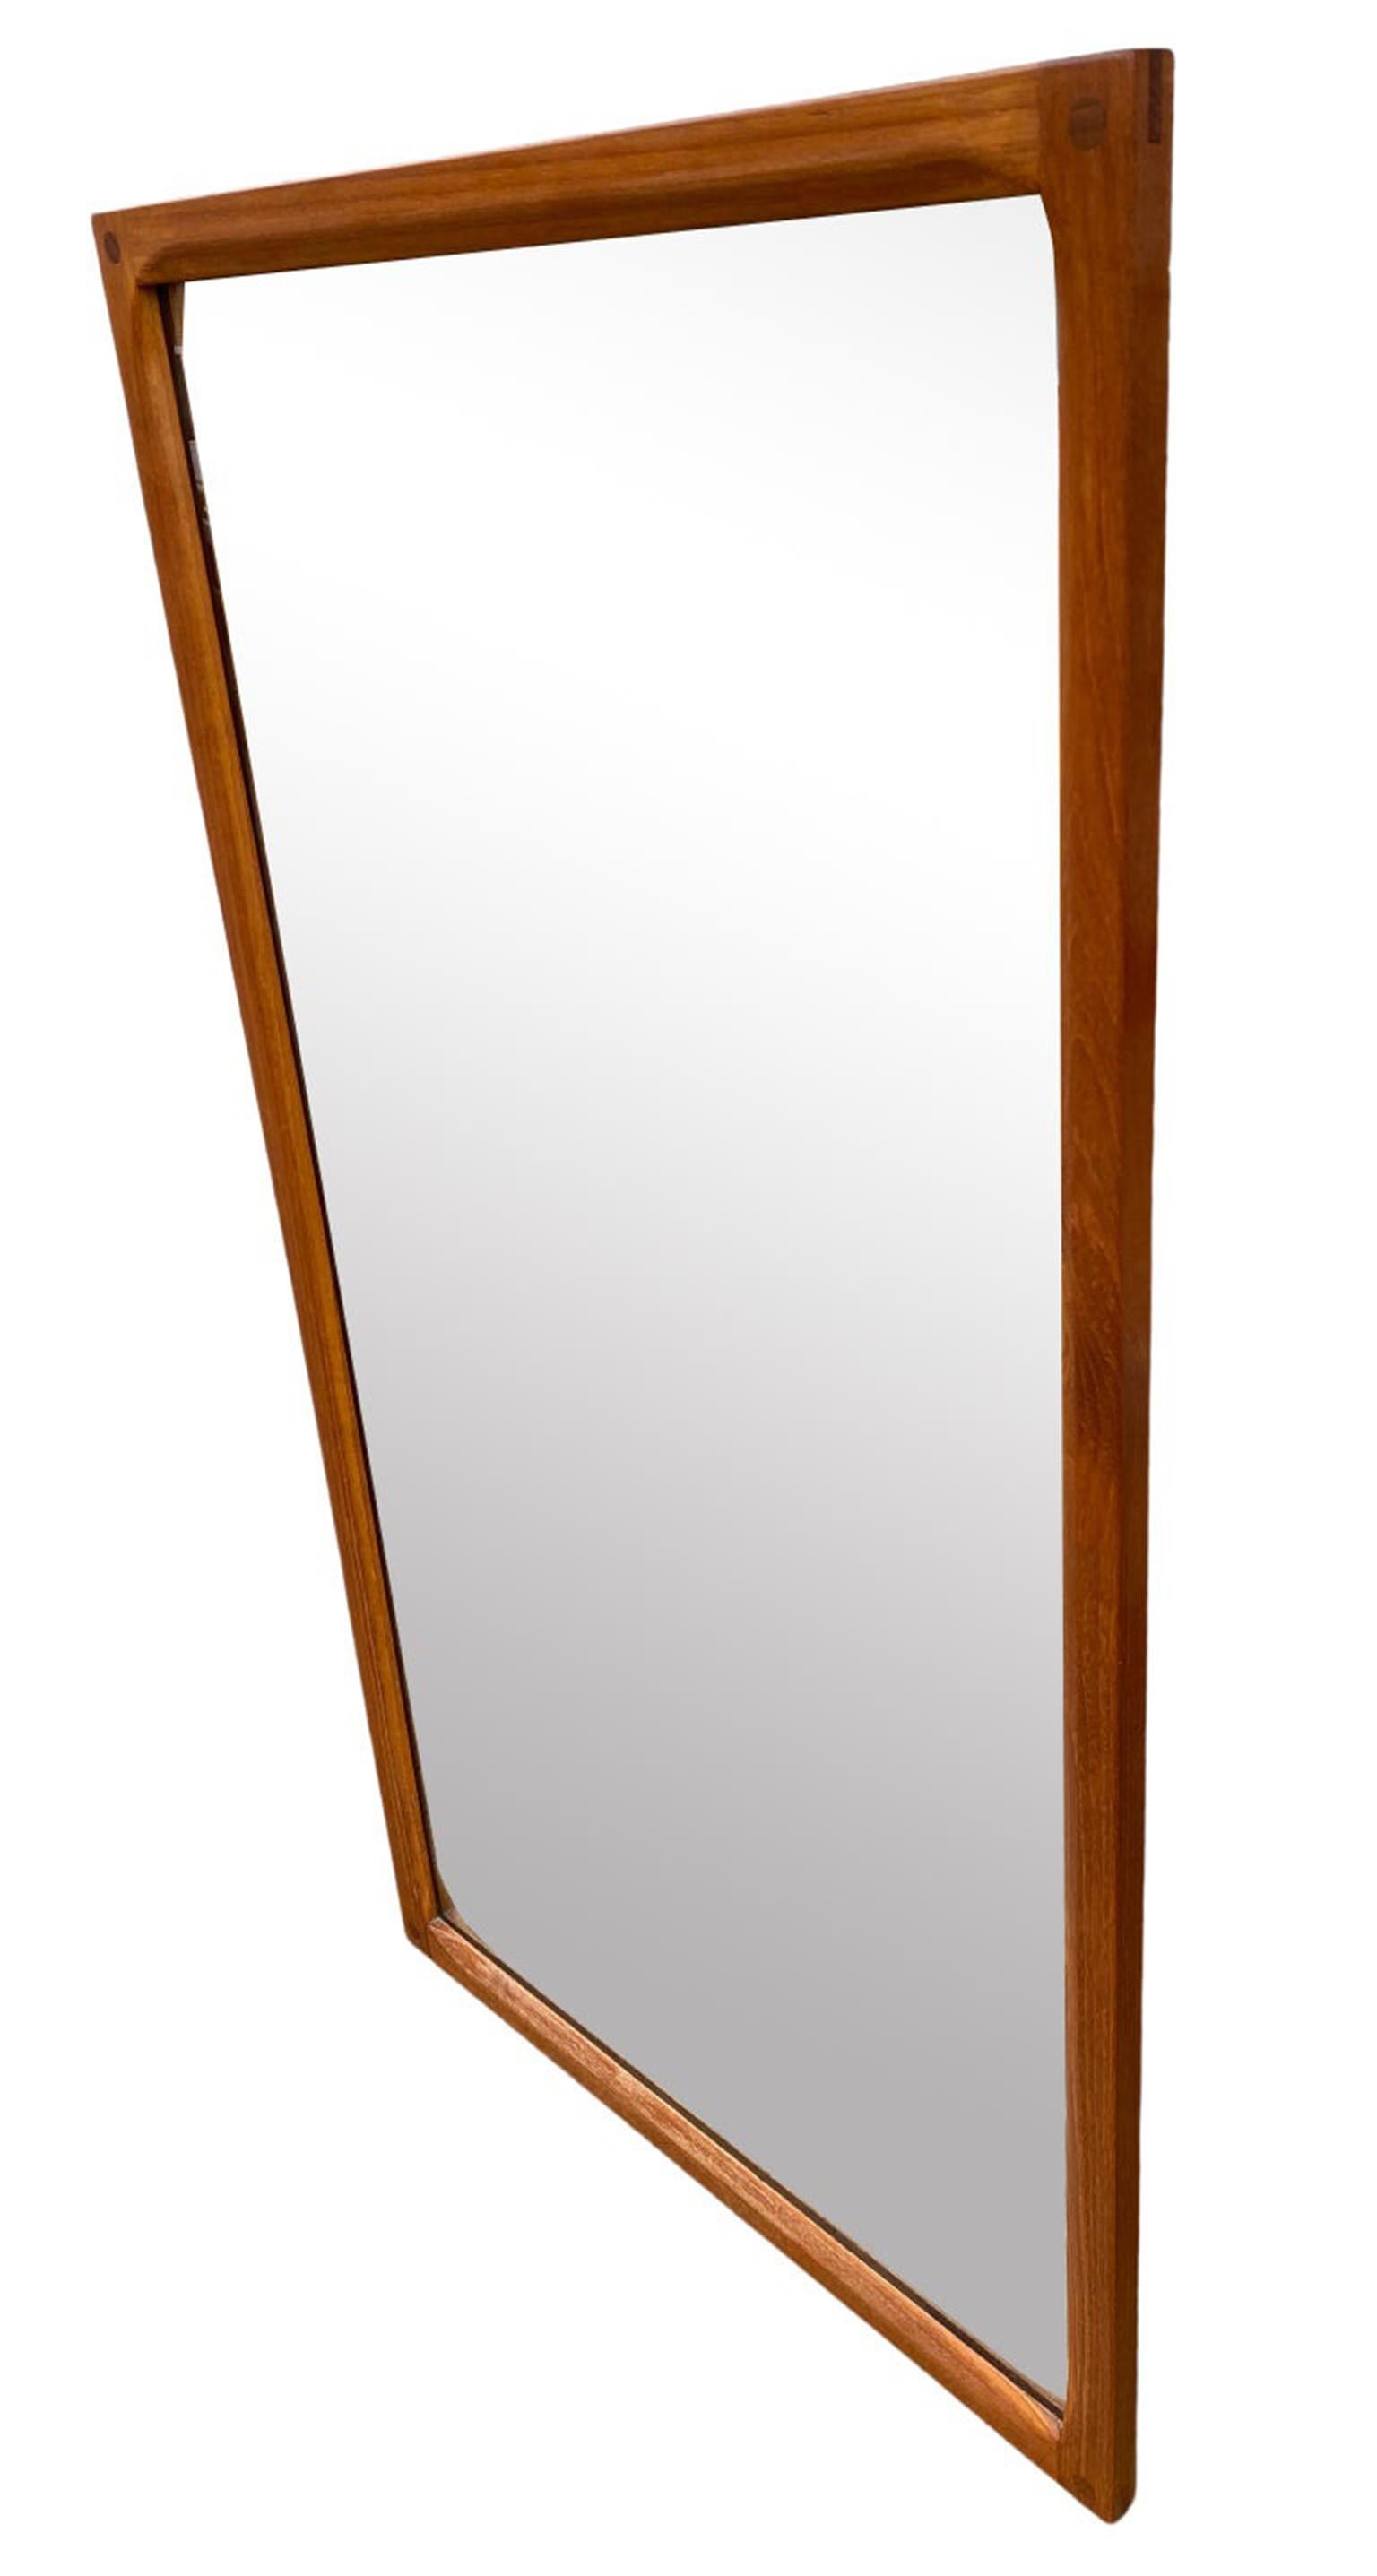 Beautiful Midcentury Danish Modern Teak Mirror by Kai Kristiansen For Sale 1